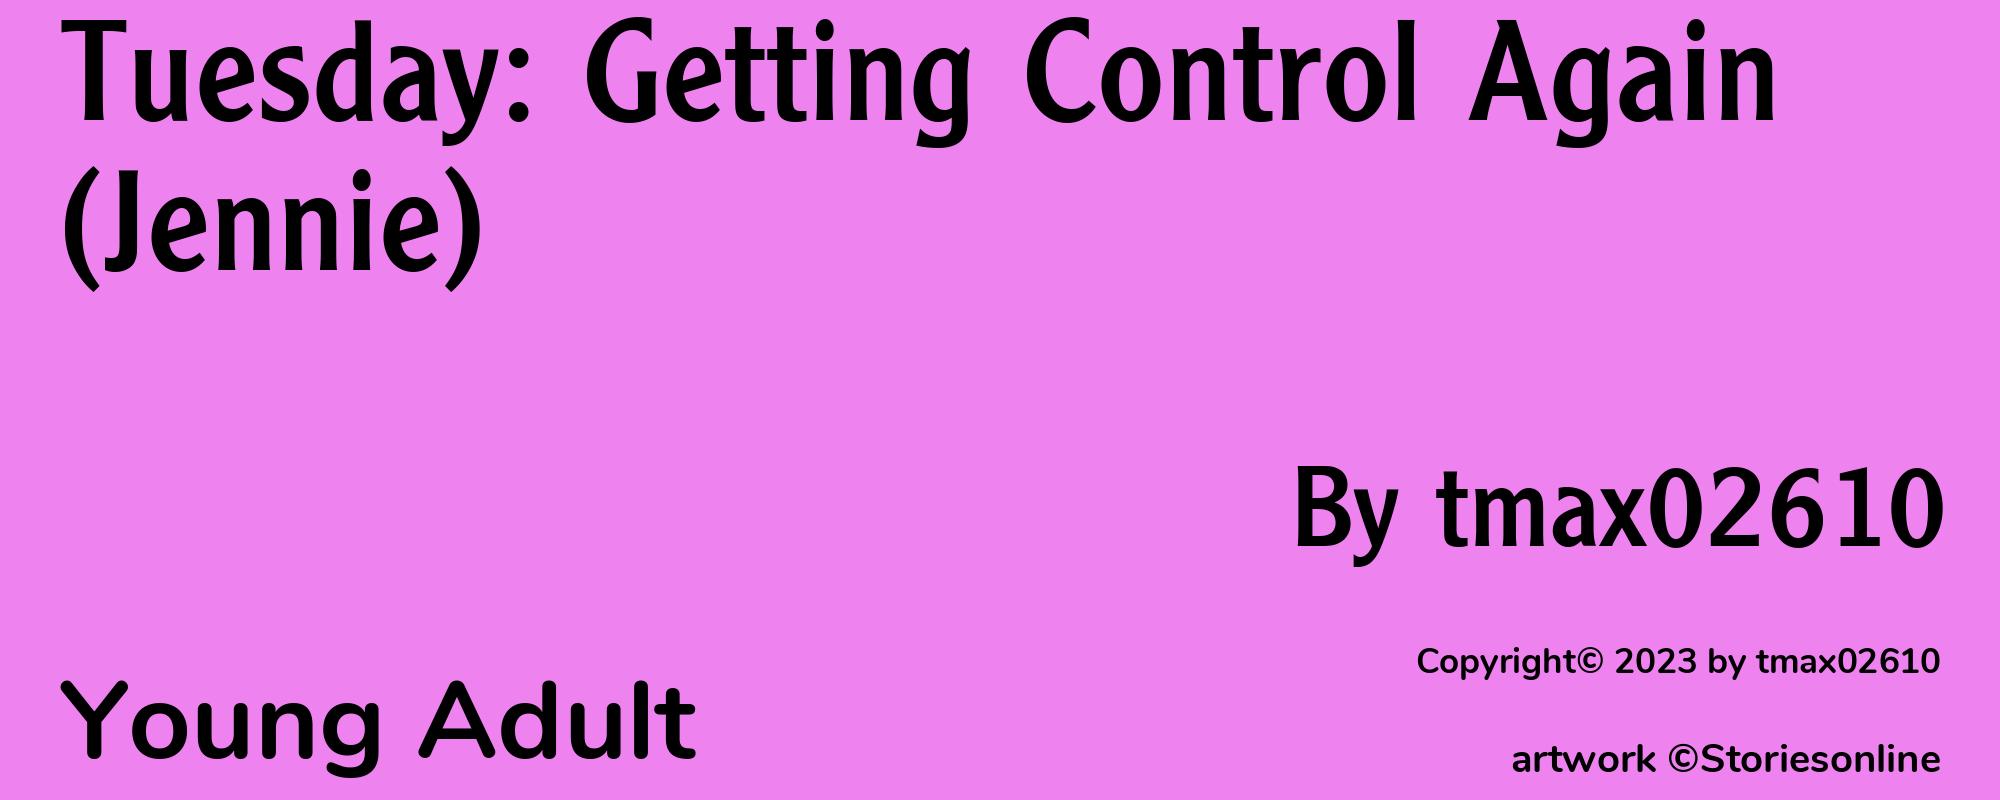 Tuesday: Getting Control Again (Jennie) - Cover